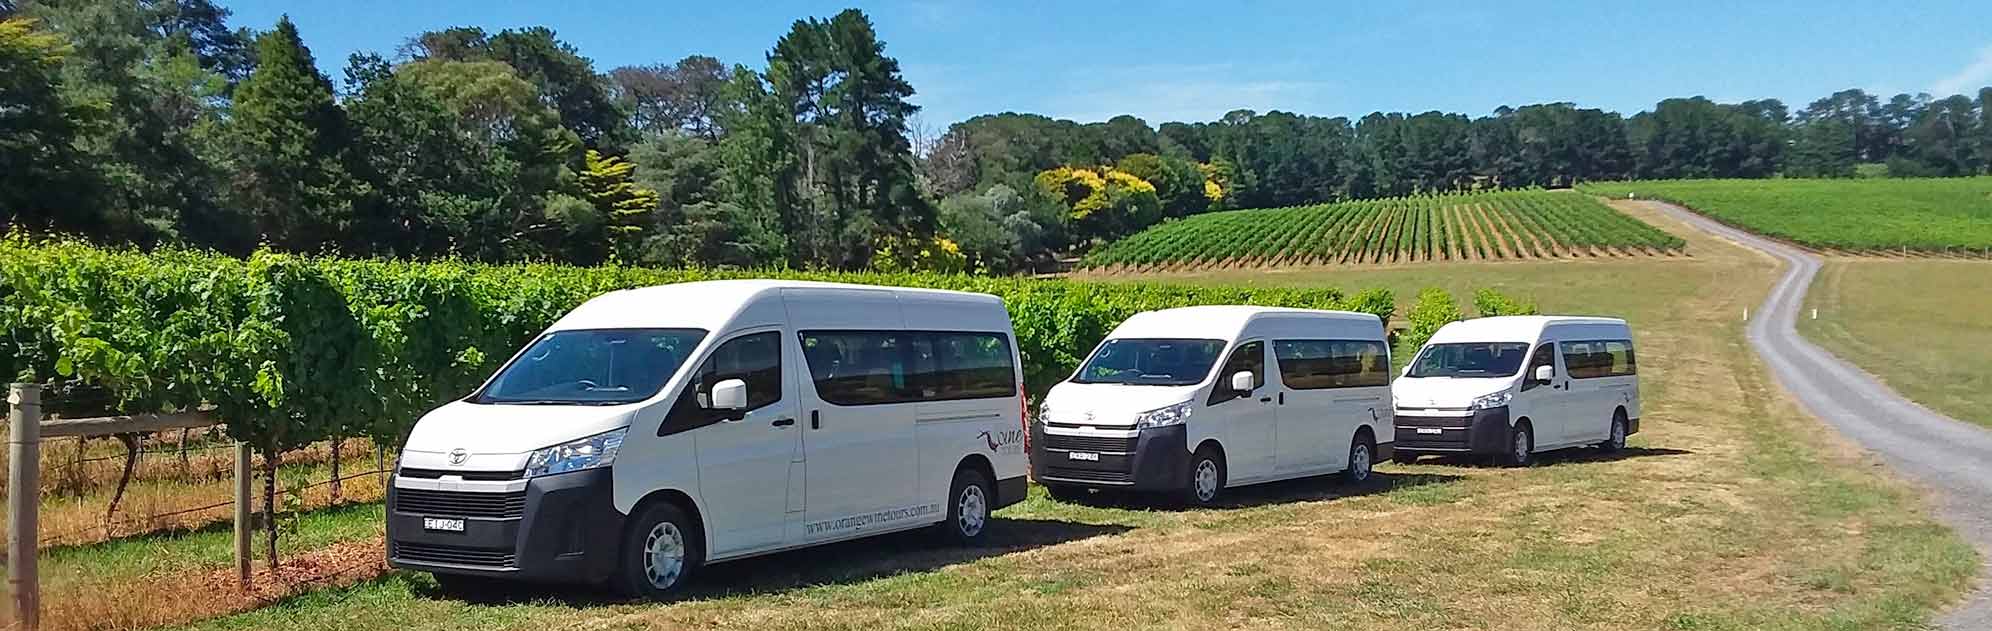 Three tour vans